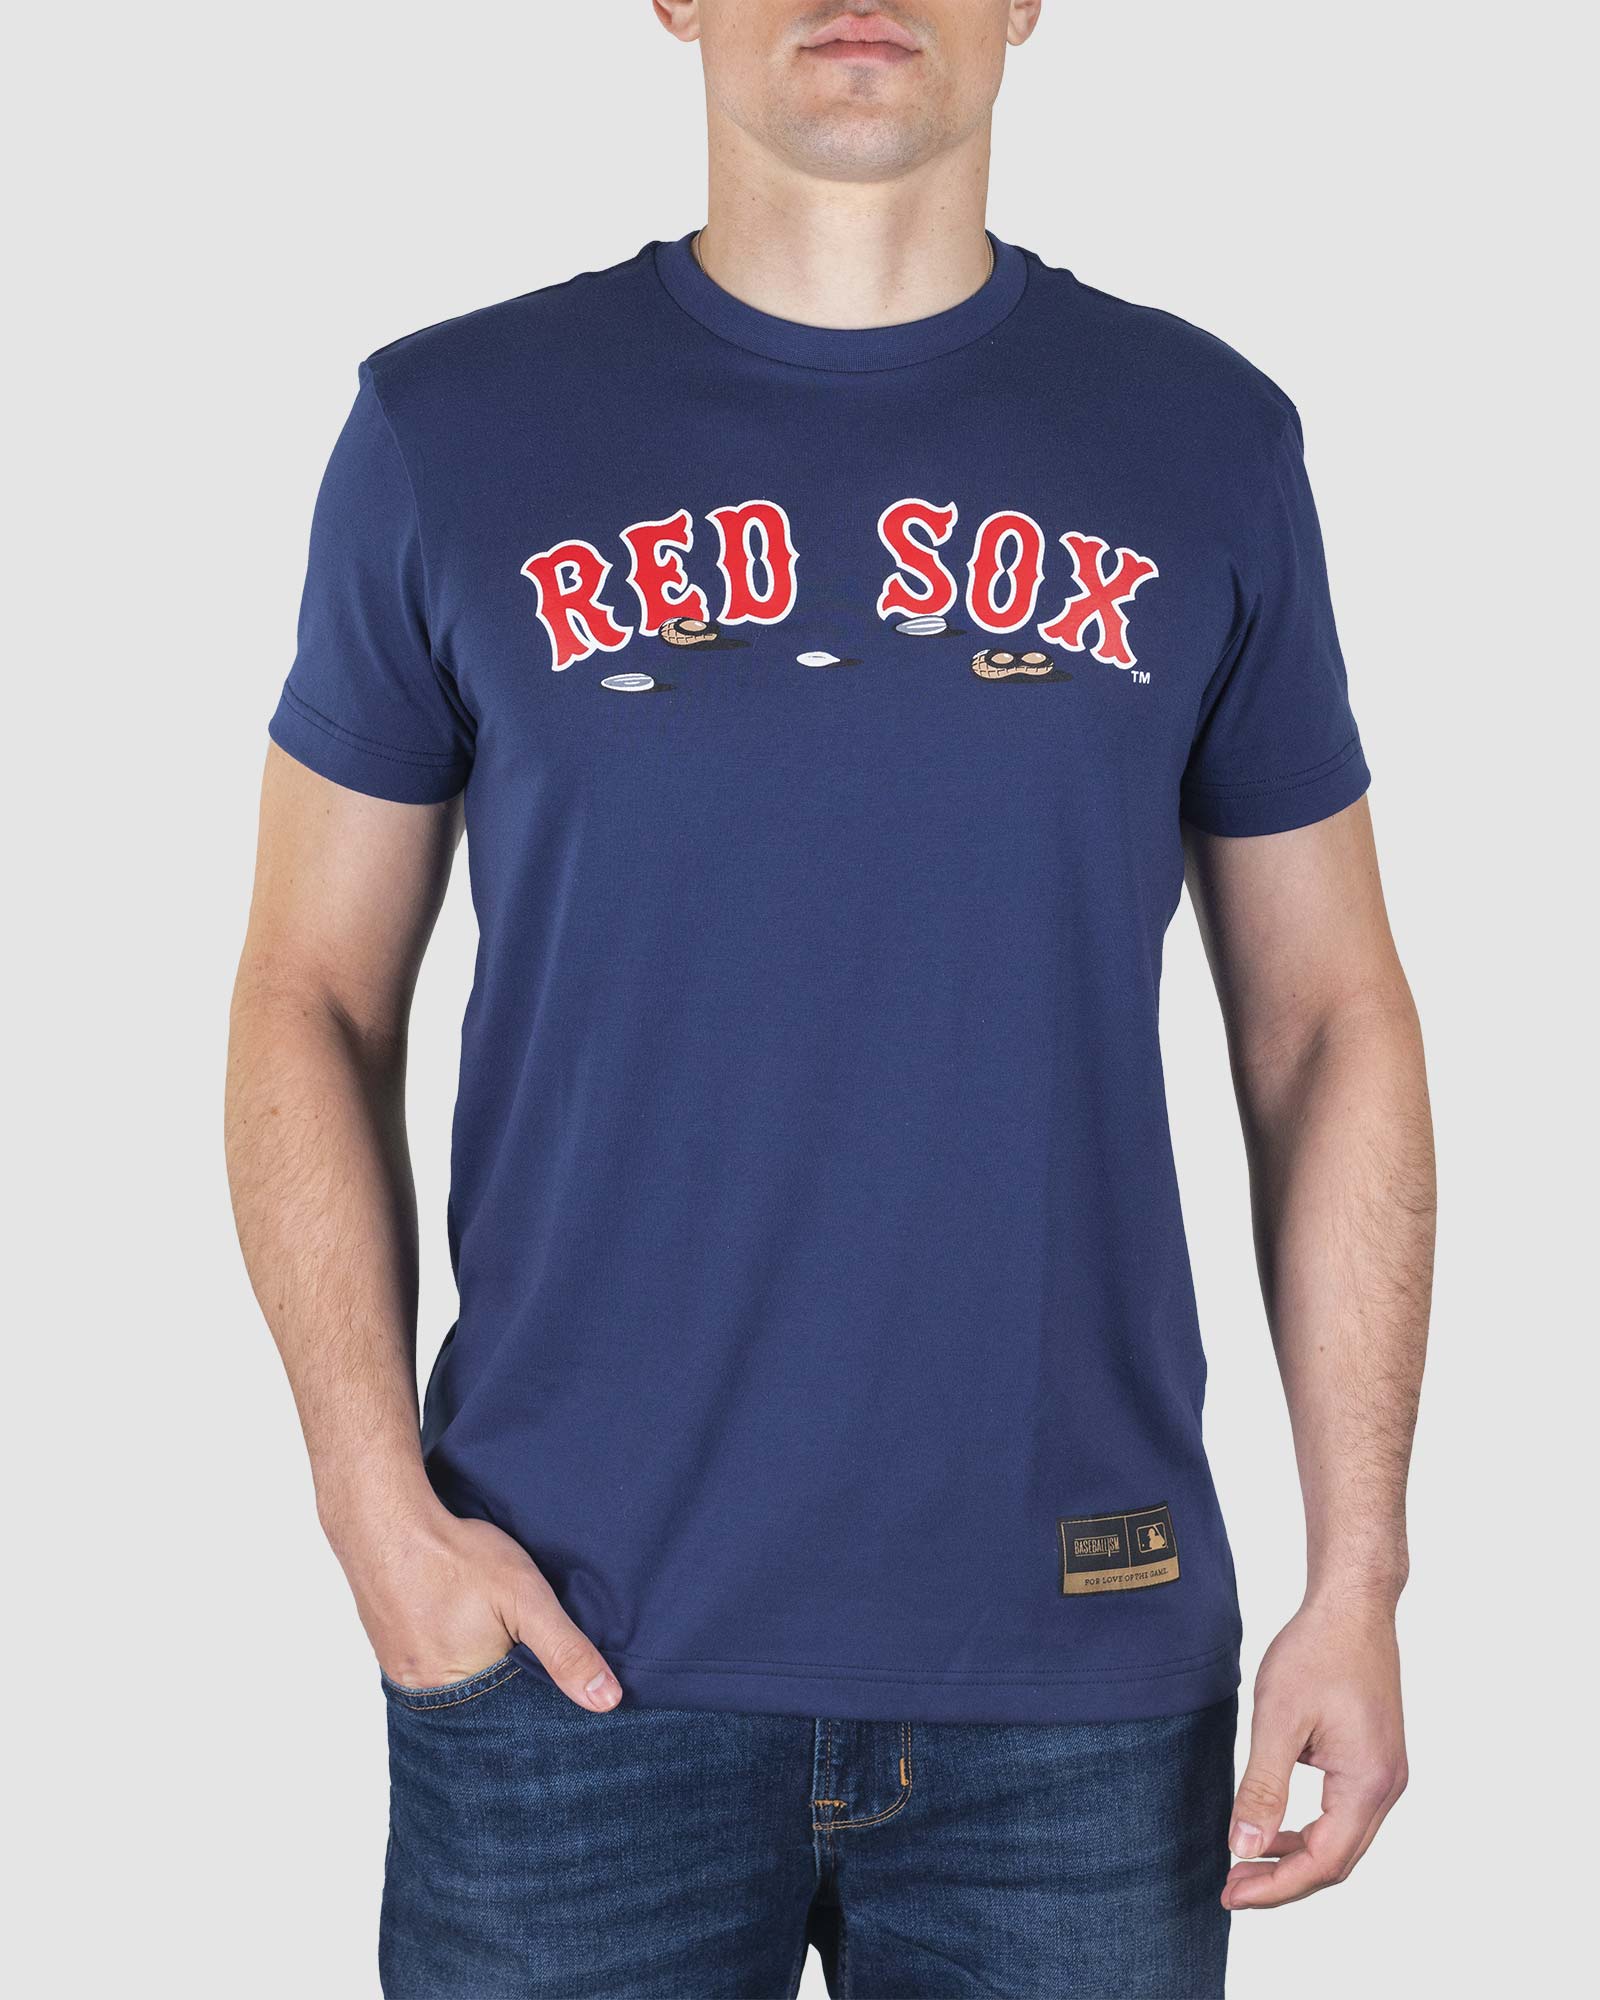 red sox player shirt